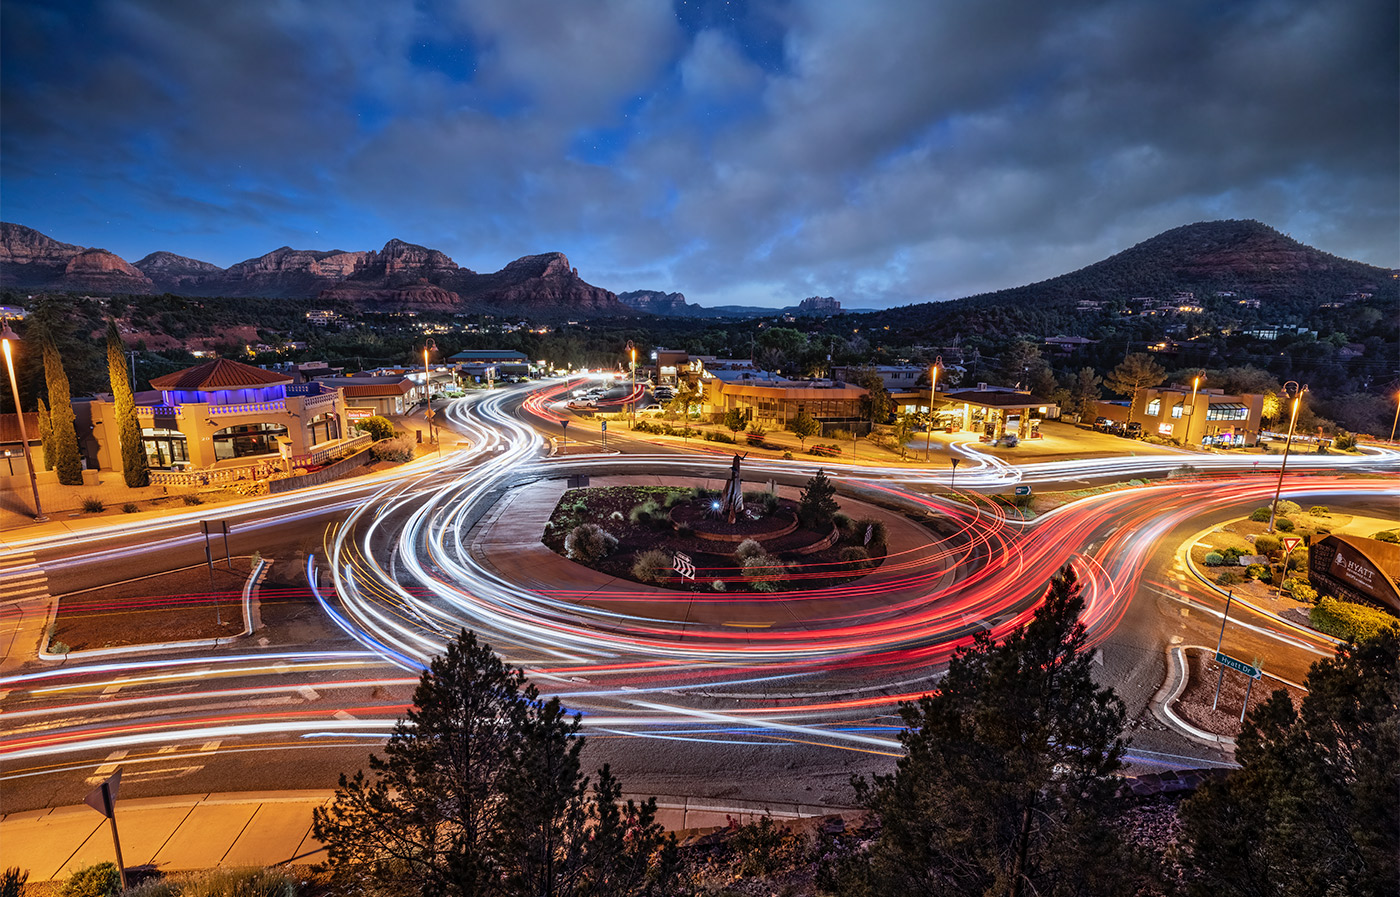 Car trails at the roundabout in Sedona, Arizona